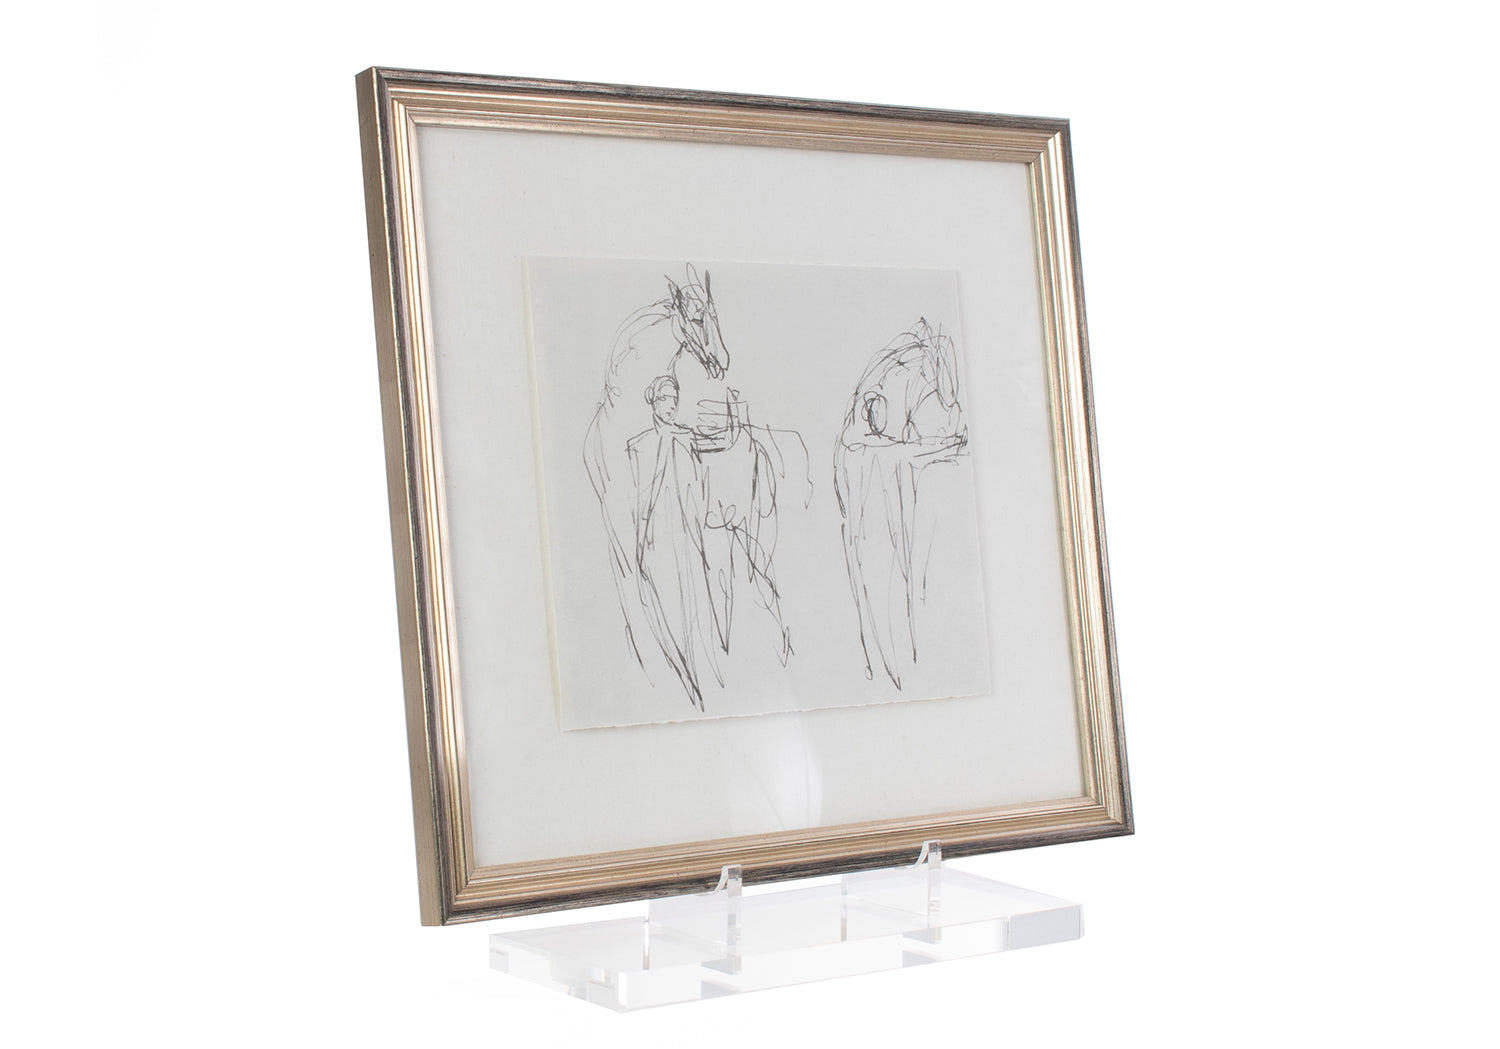 H Frame Acrylic Easel Stand  Transparent and Elegant Design